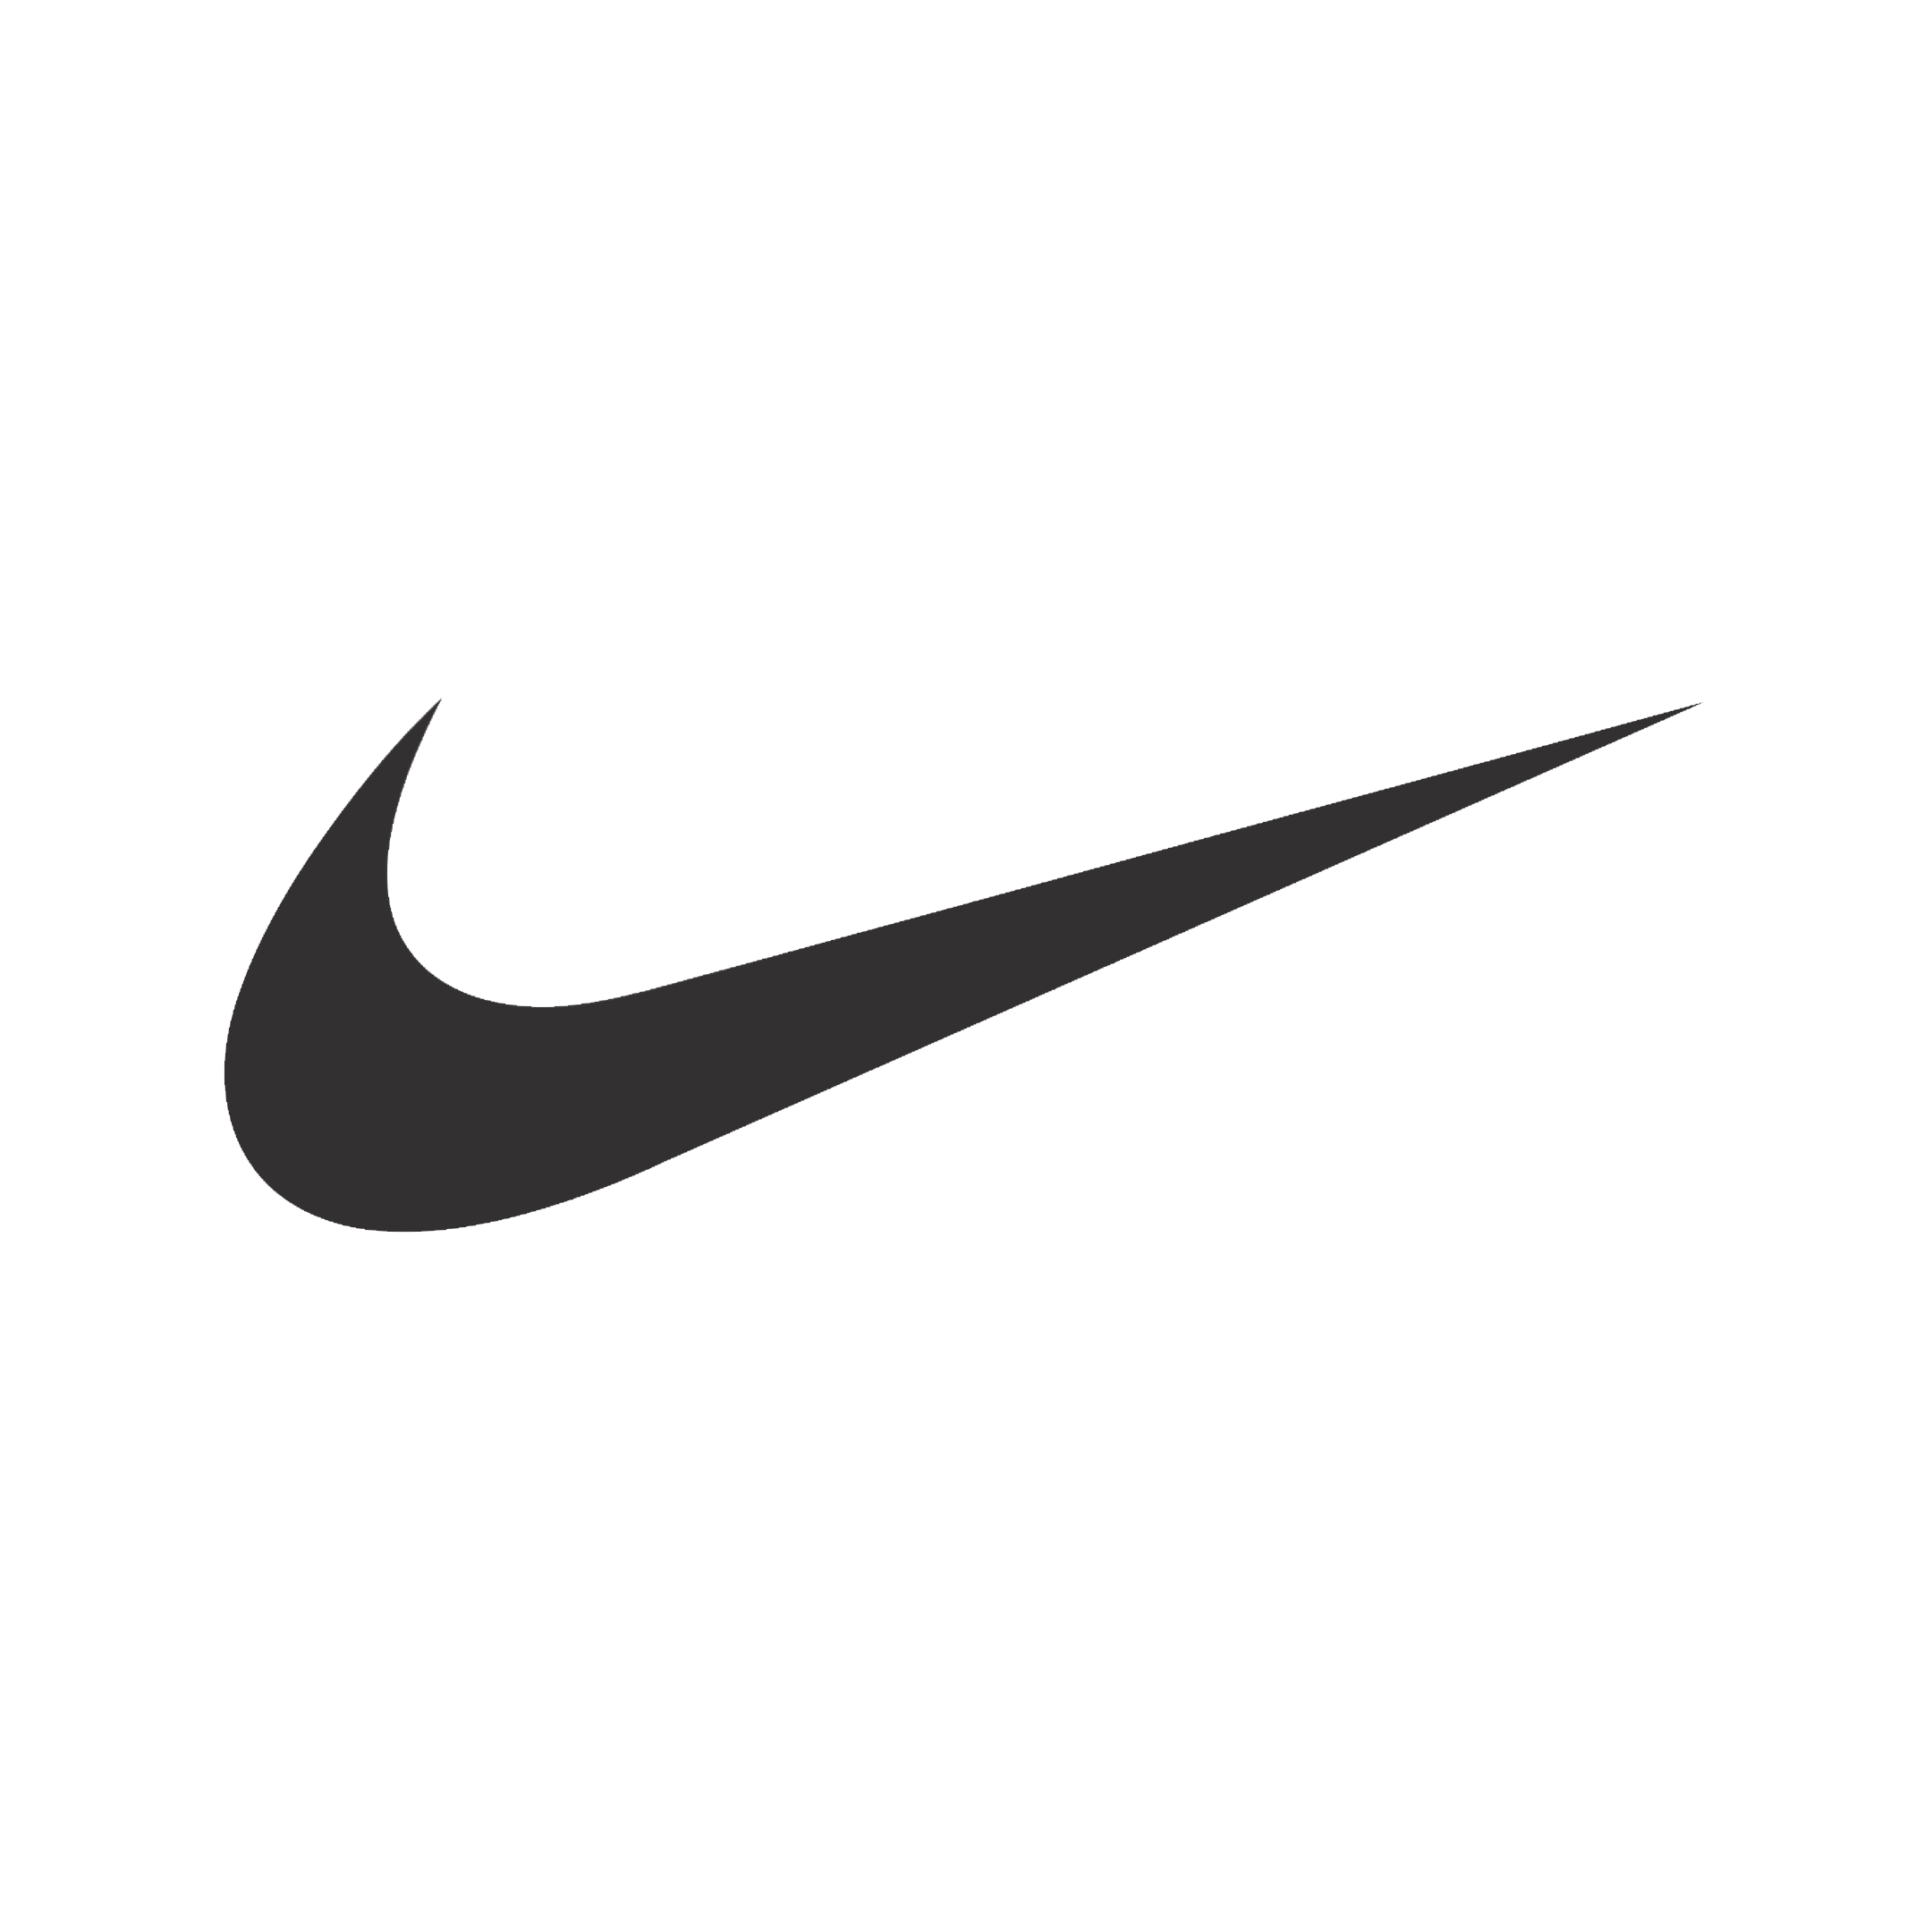 Свуш найк. Nike Swoosh Type. Свуш найк вектор. Nike Swoosh logo. Черный значок найк